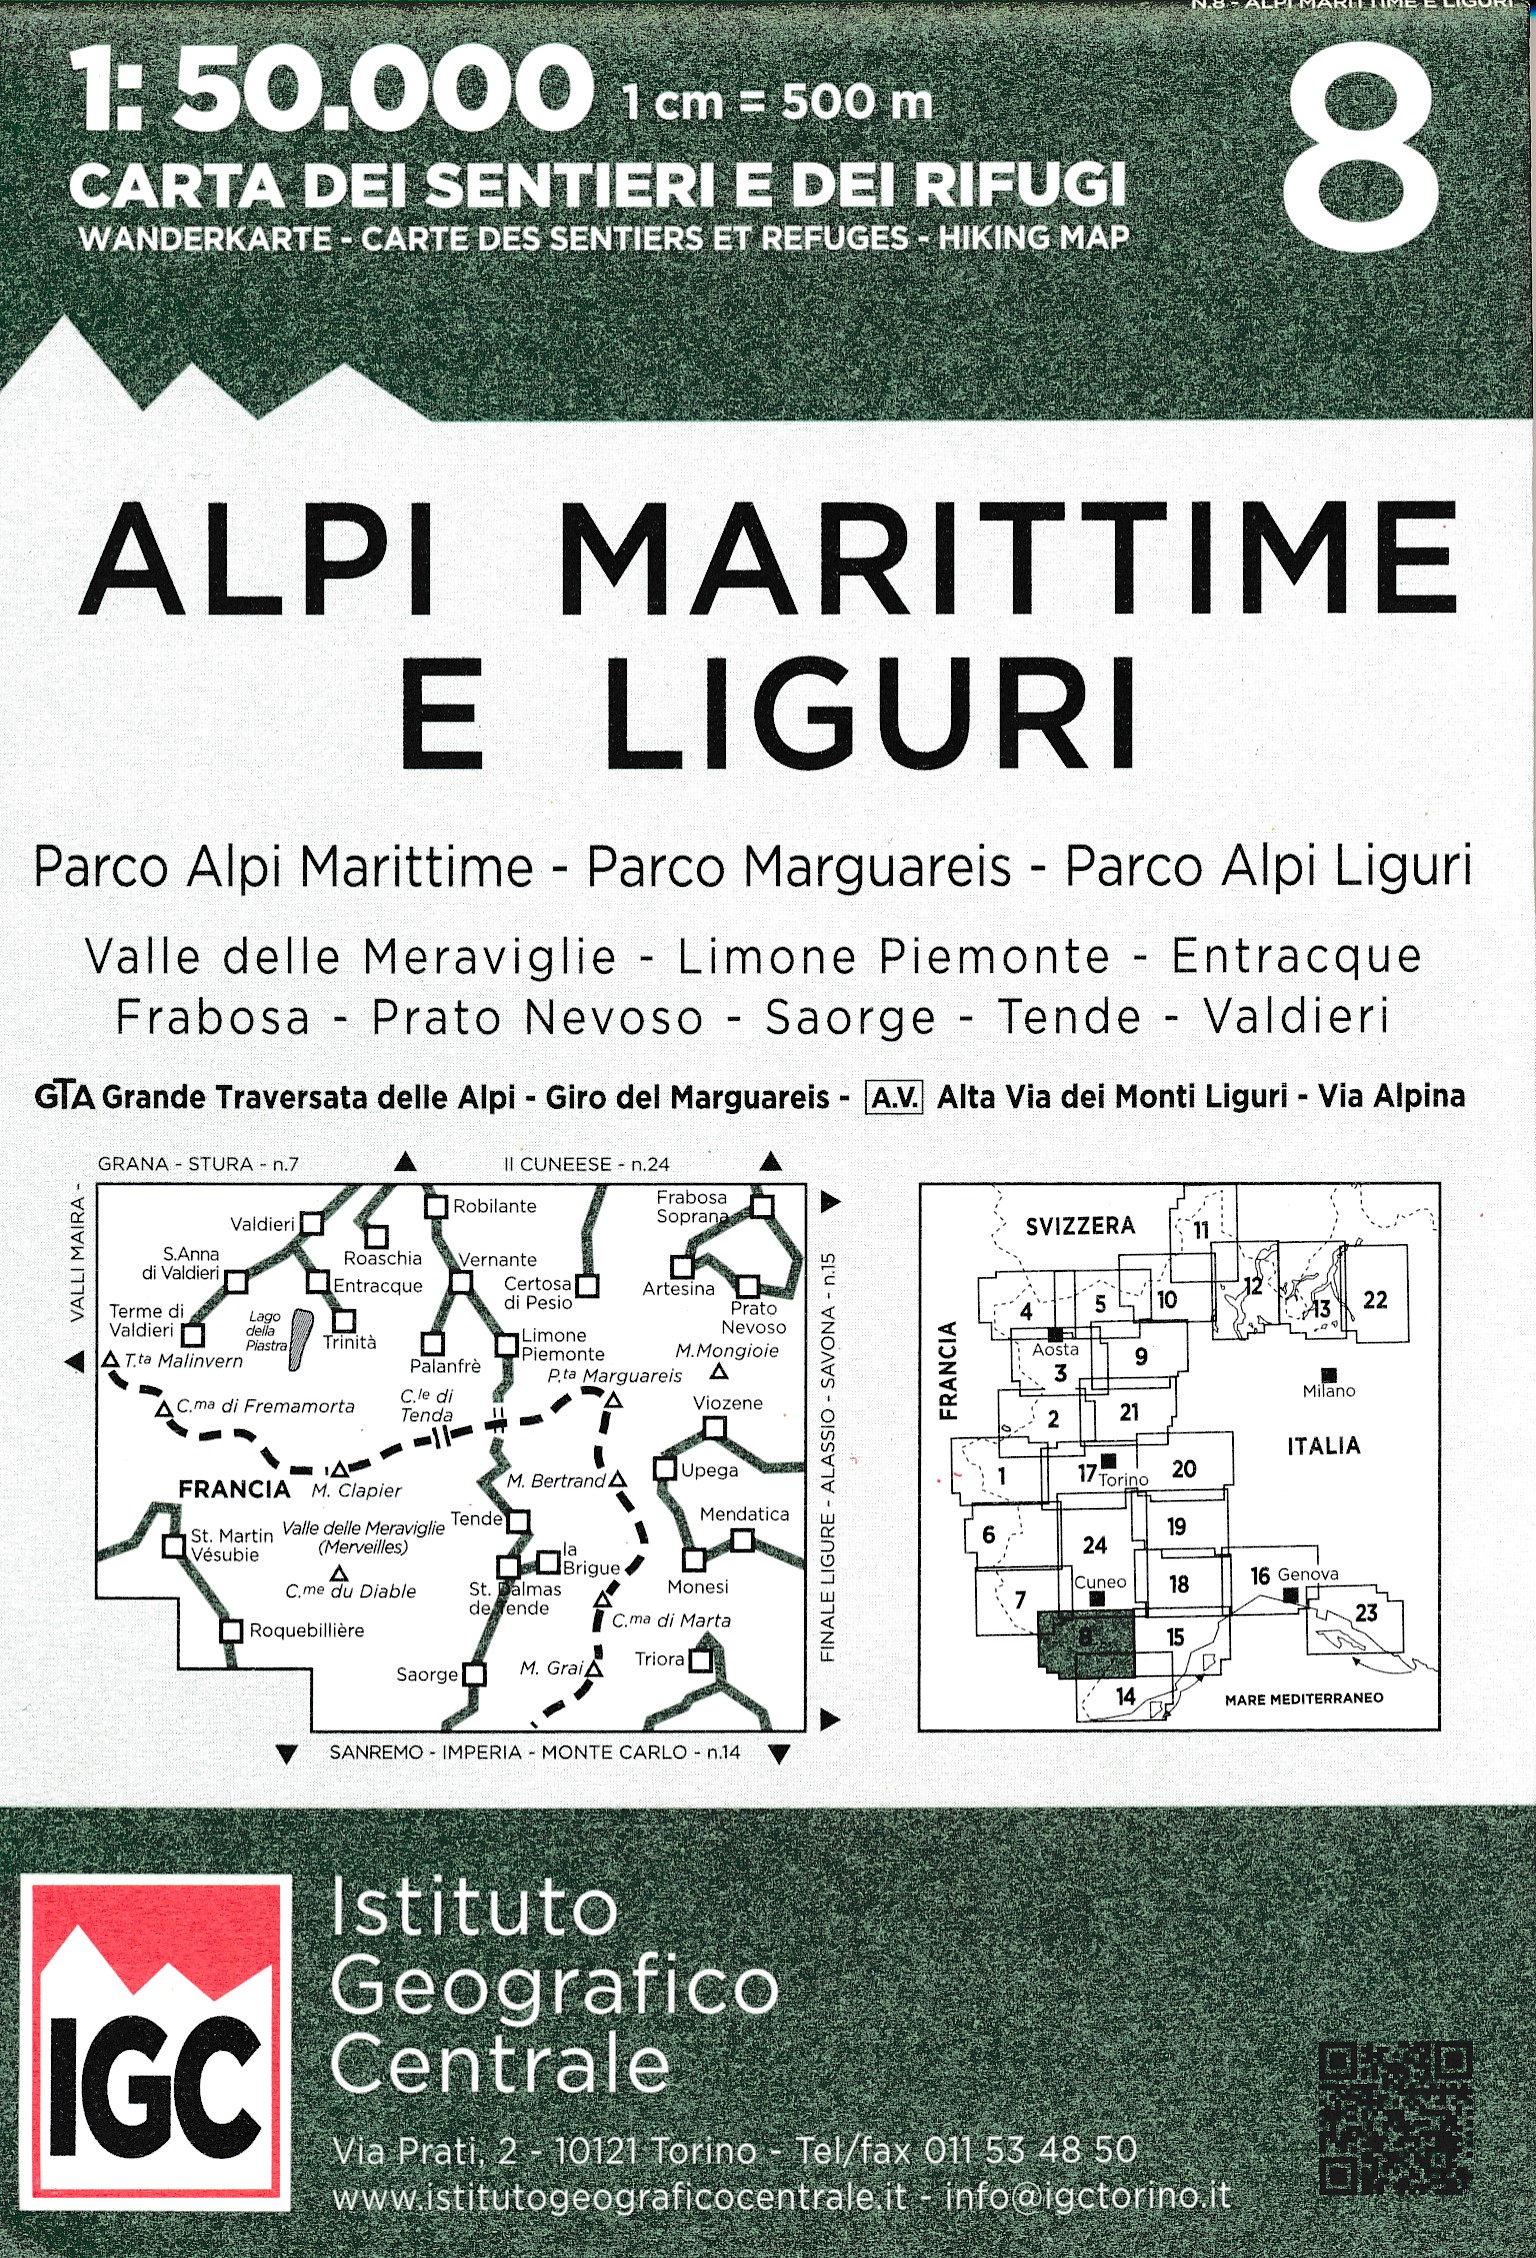 Online bestellen: Wandelkaart 08 Alpi marittime e Liguri | IGC - Istituto Geografico Centrale